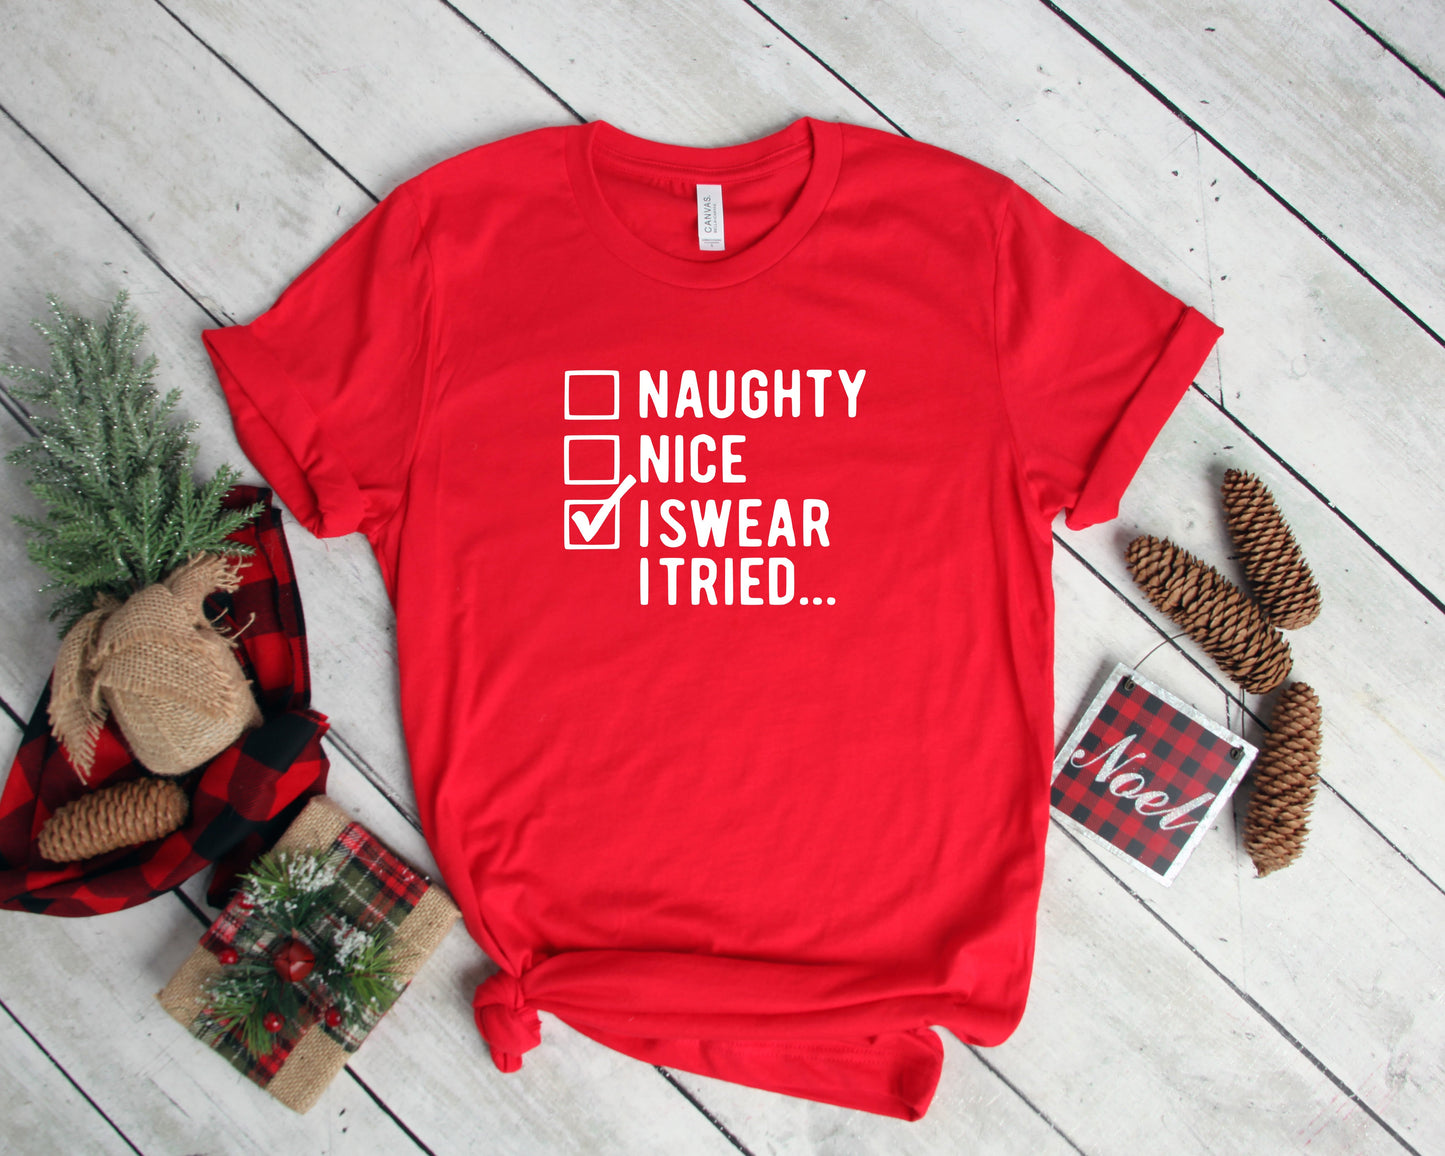 I Swear I Tried Shirt, Funny Christmas Shirts, Christmas Shirt